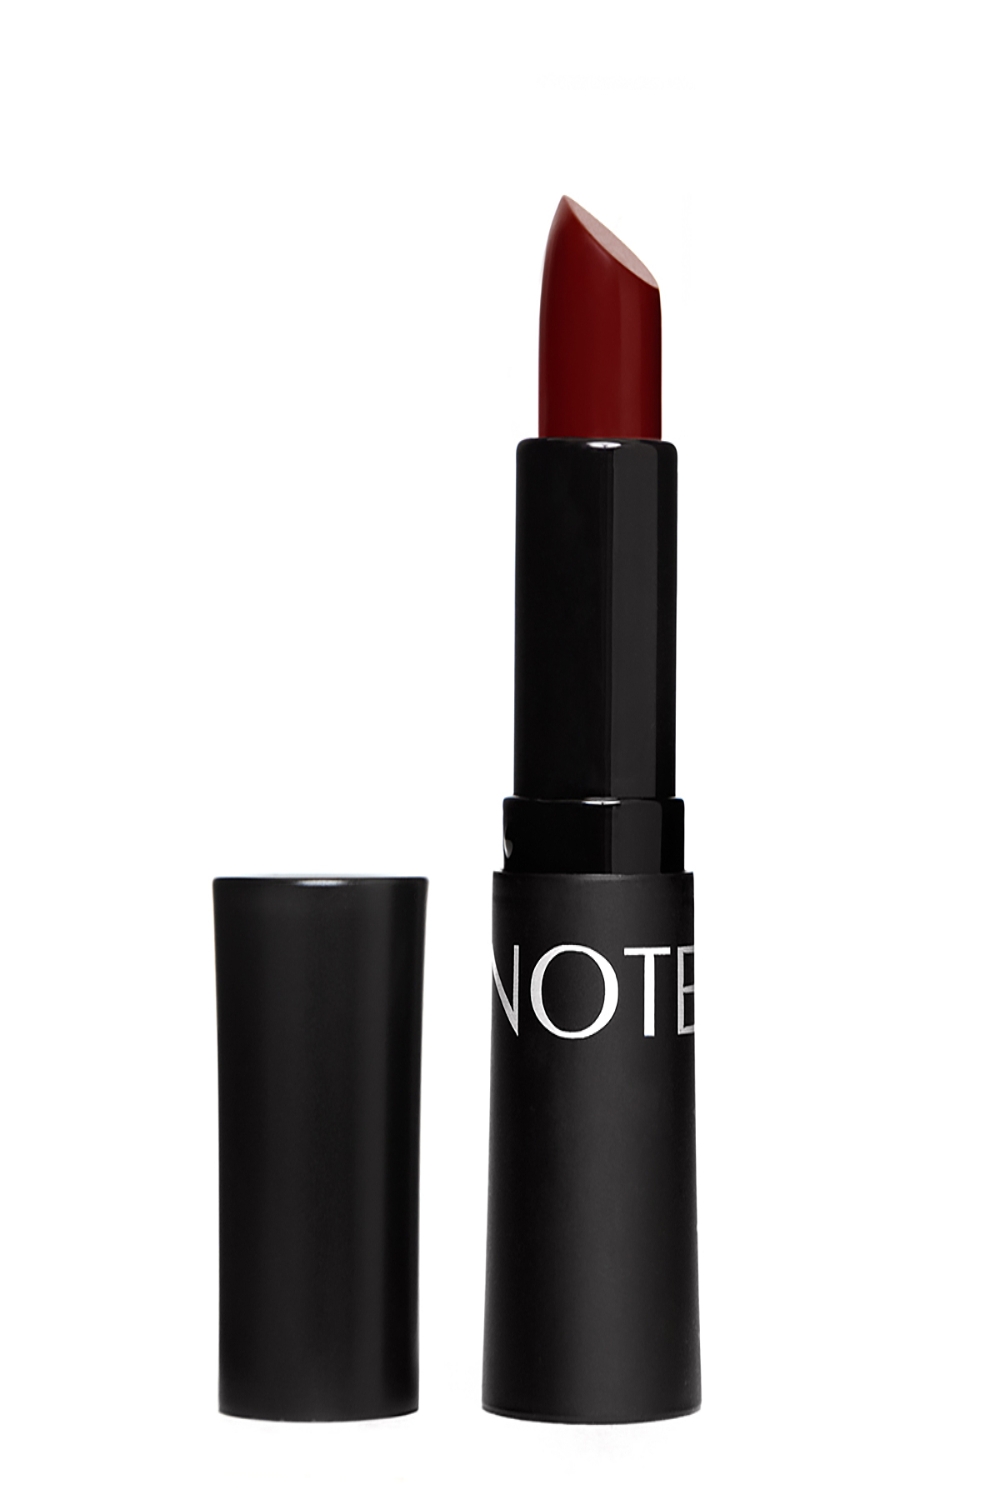 NOTE | Dark Wine Lipstick